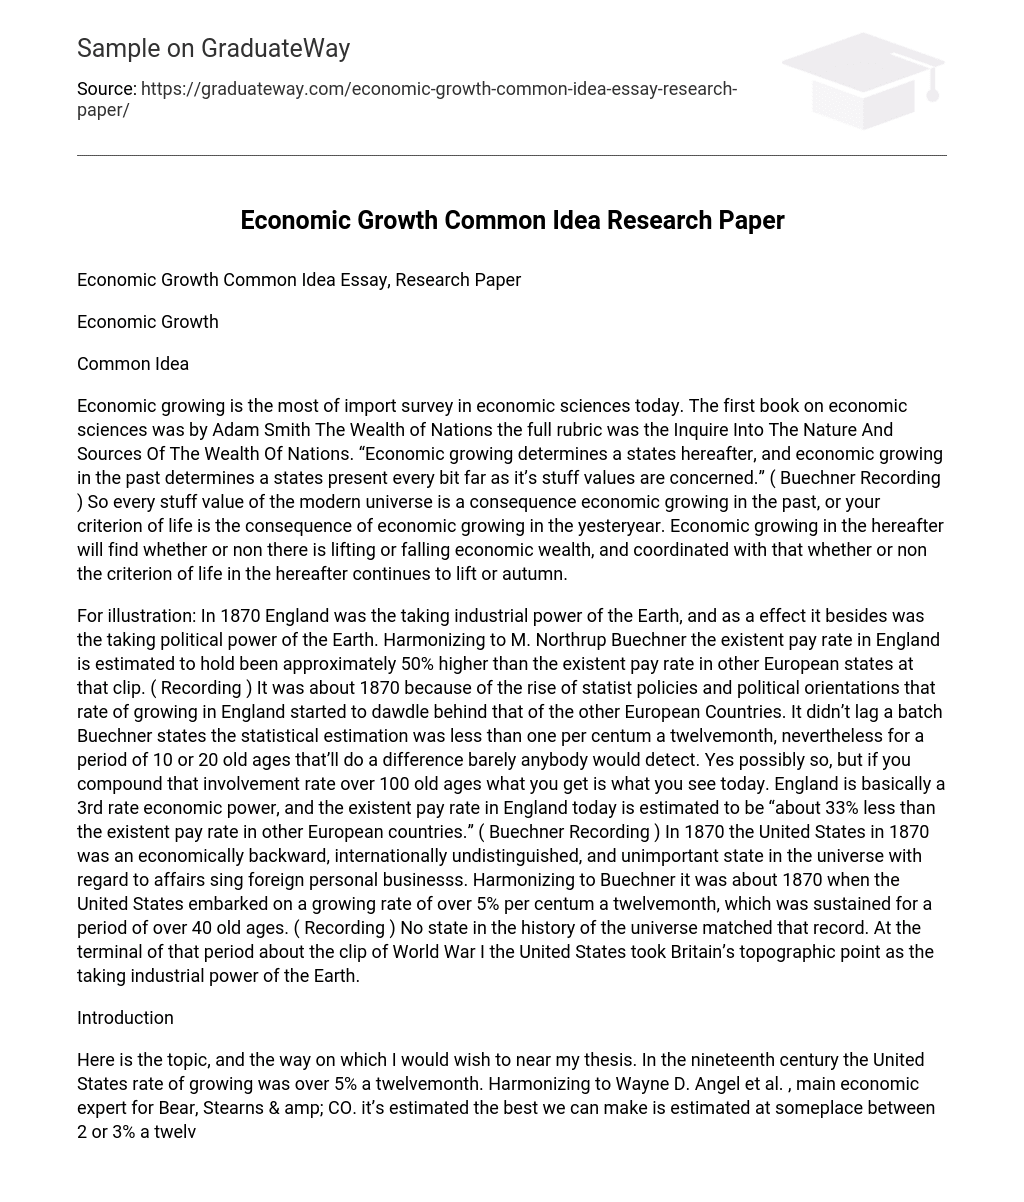 Economic Growth Common Idea Research Paper